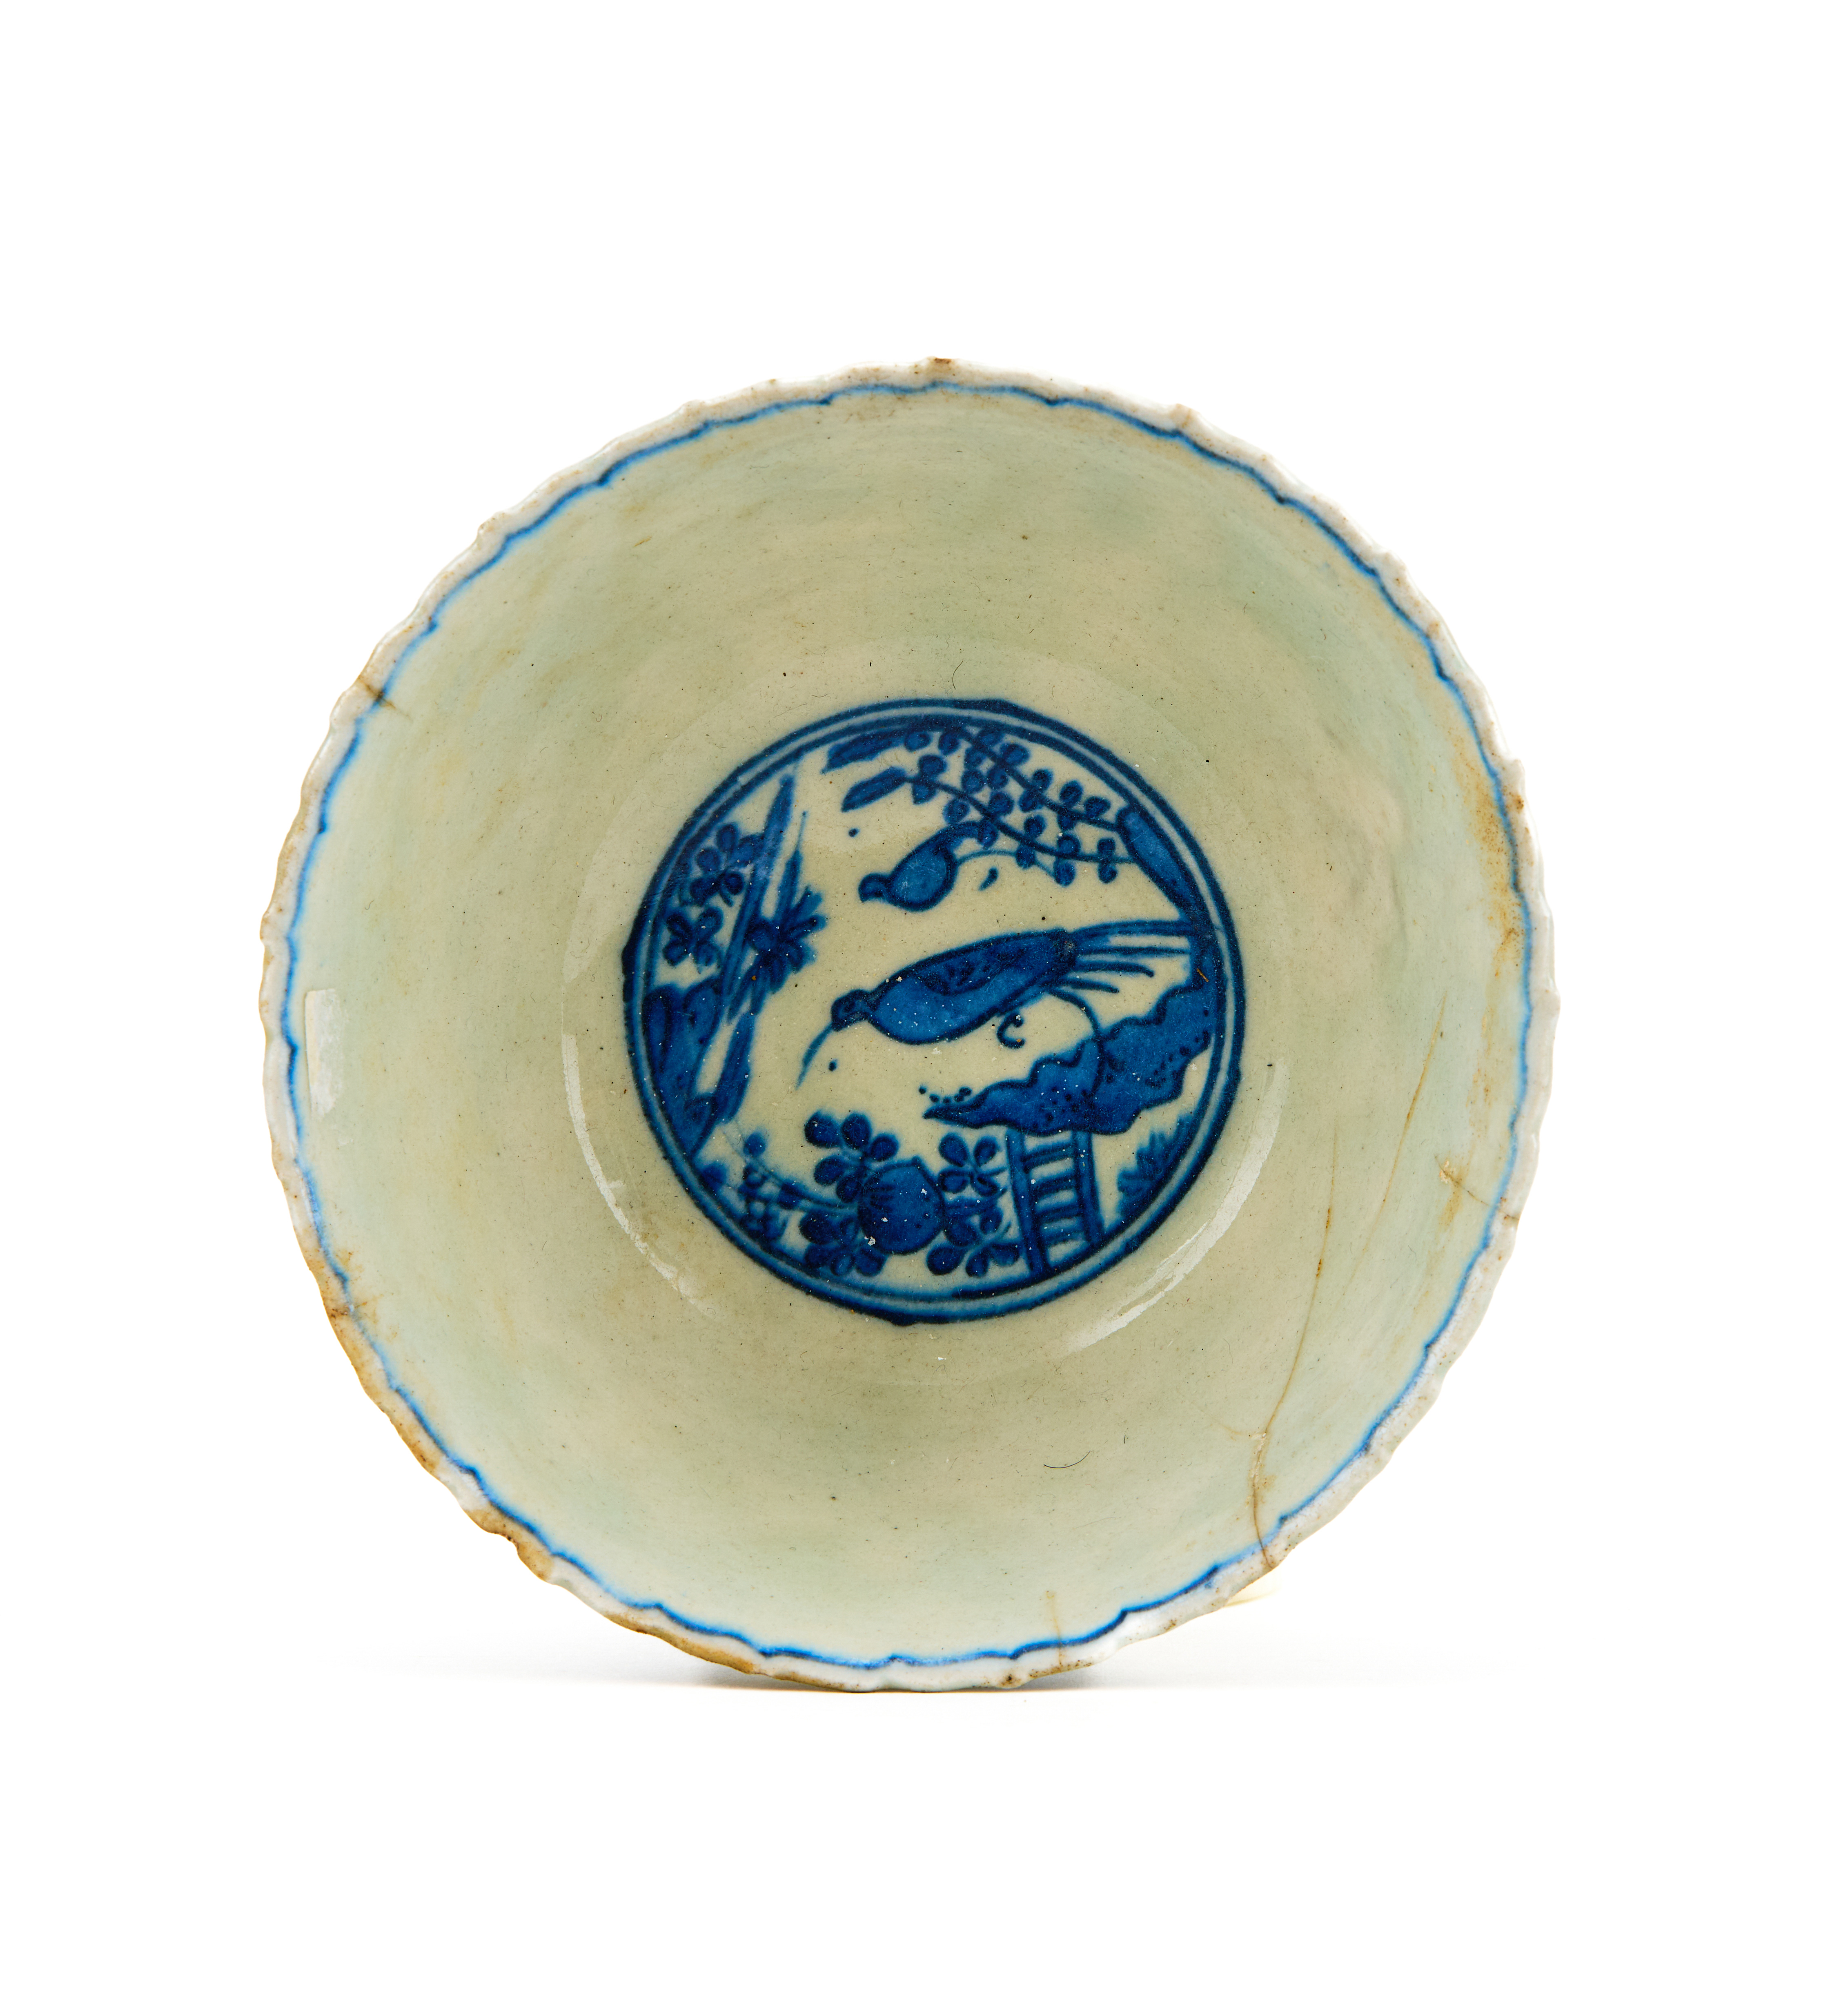 A SAFAVID BLUE & WHITE BOWL, 17TH CENTURY, PERSIA - Image 3 of 4